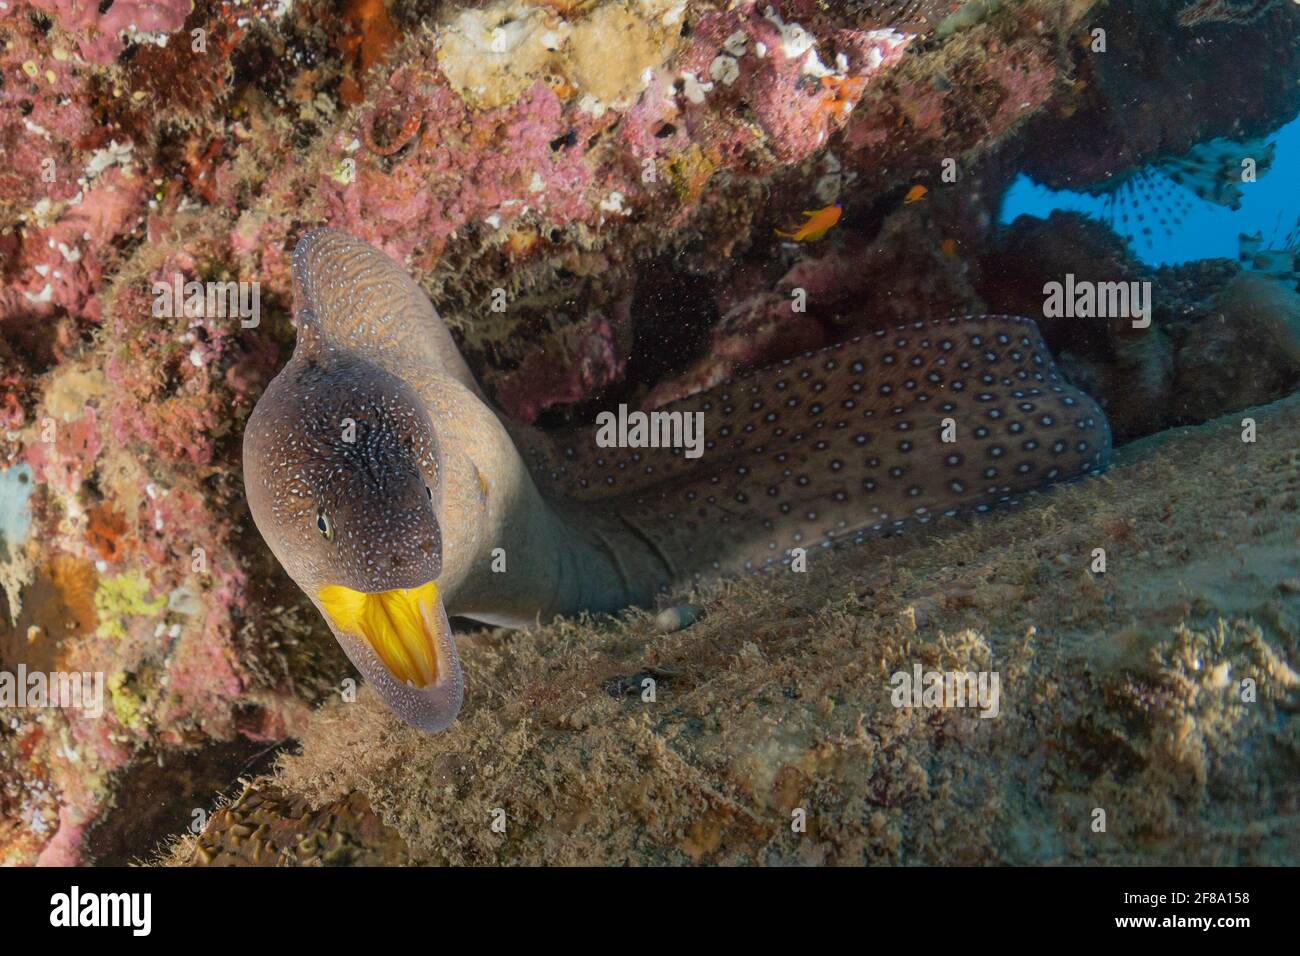 Moray eel Mooray lycodontis undulatus in the Red Sea, eilat israel Stock Photo